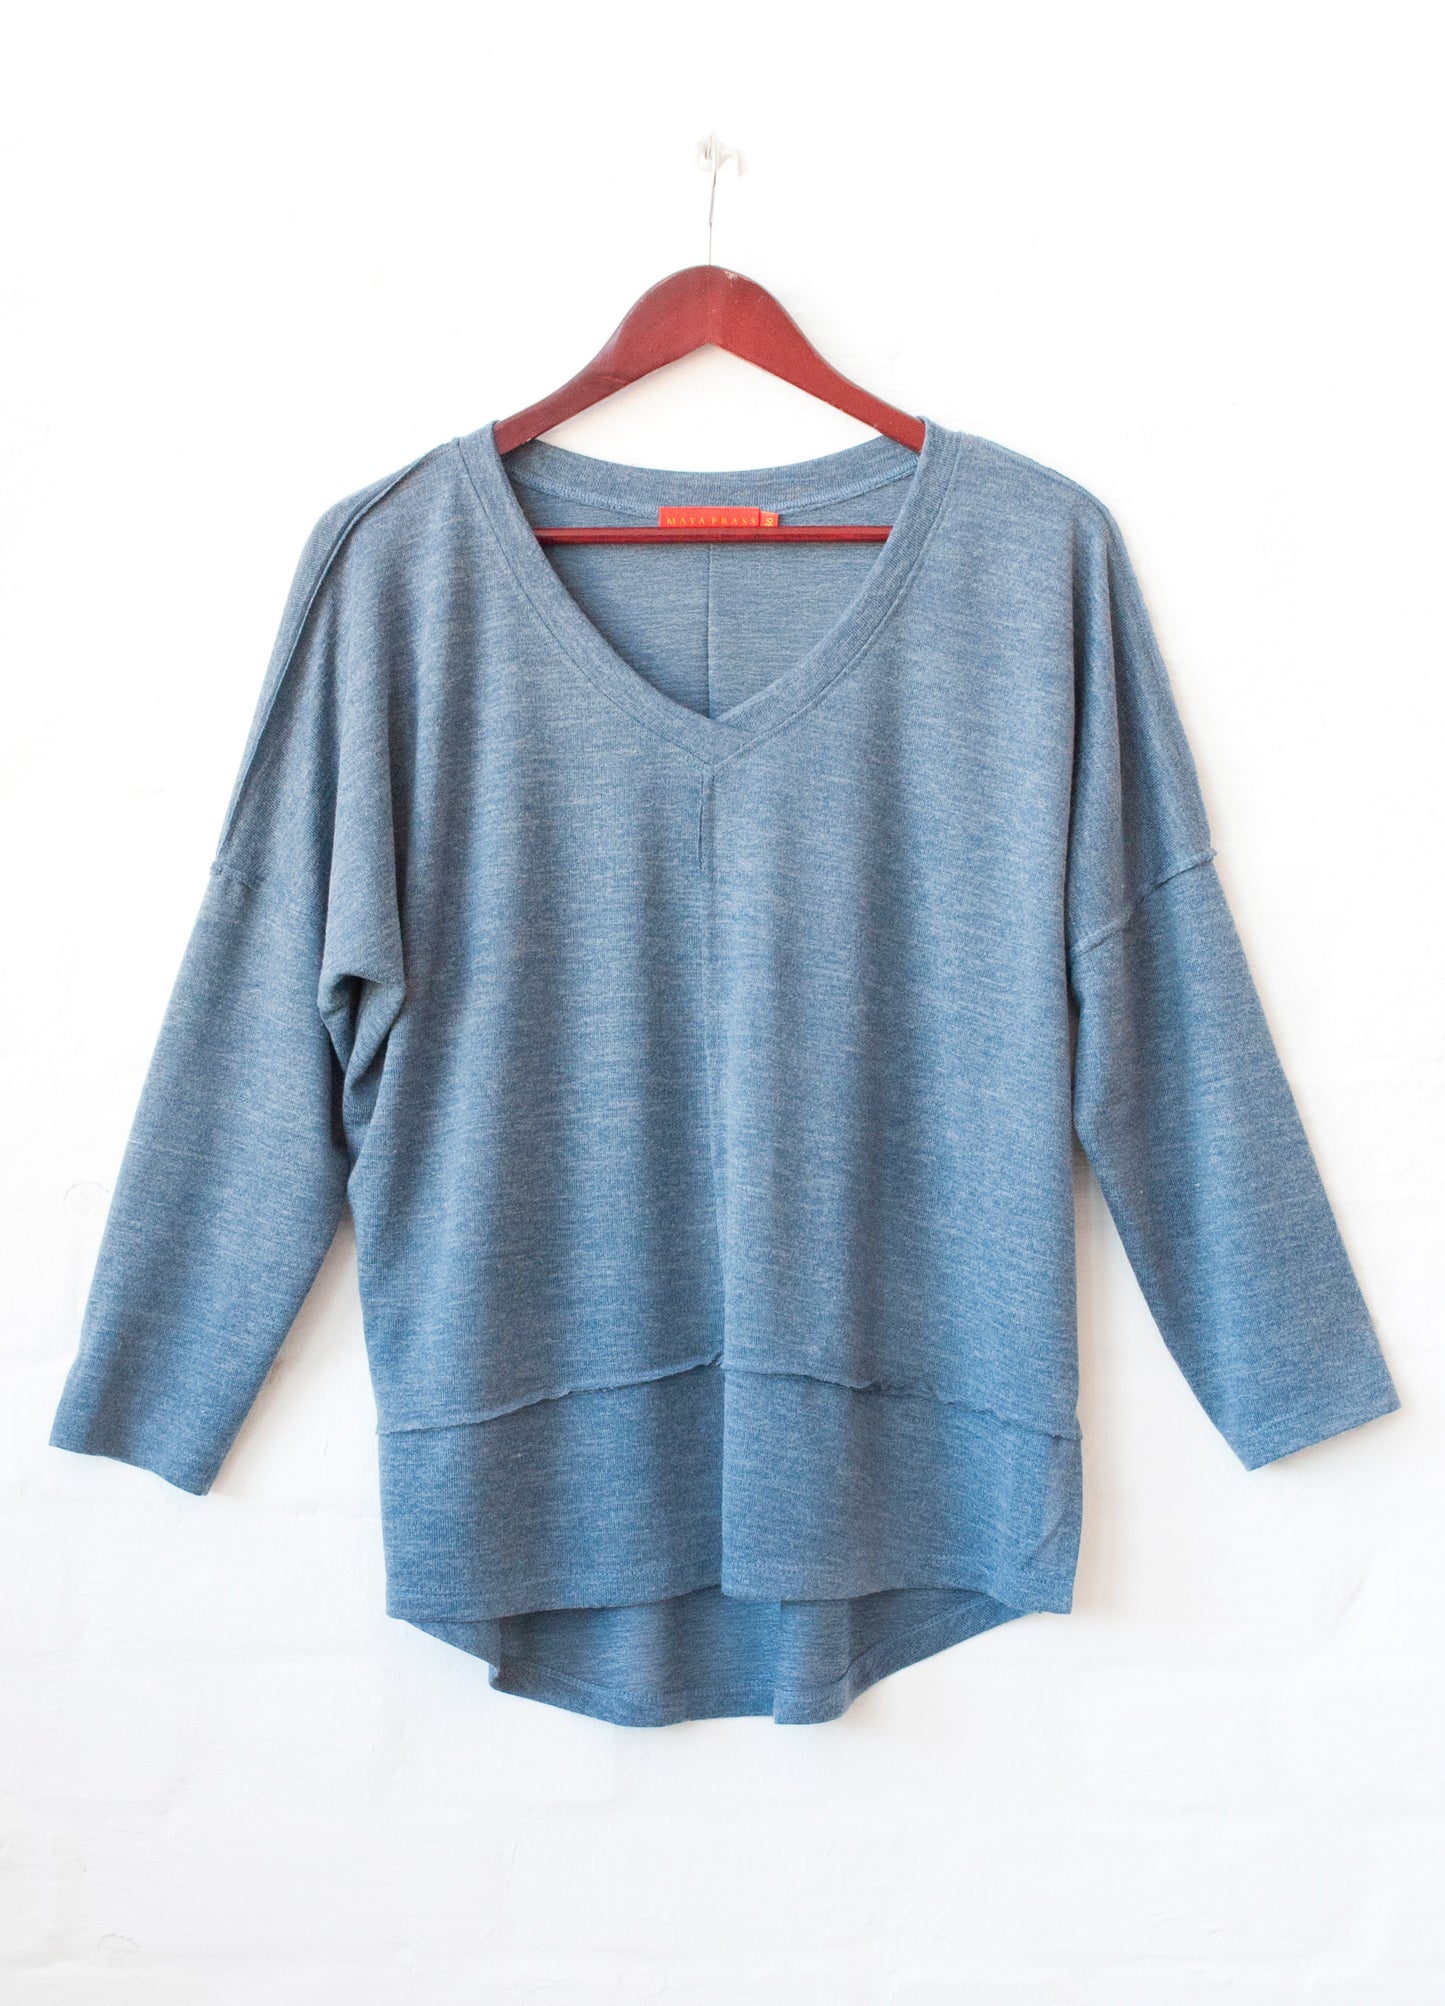 Mia Box Pullover in Indigo melange cut & sew knit size 34 left